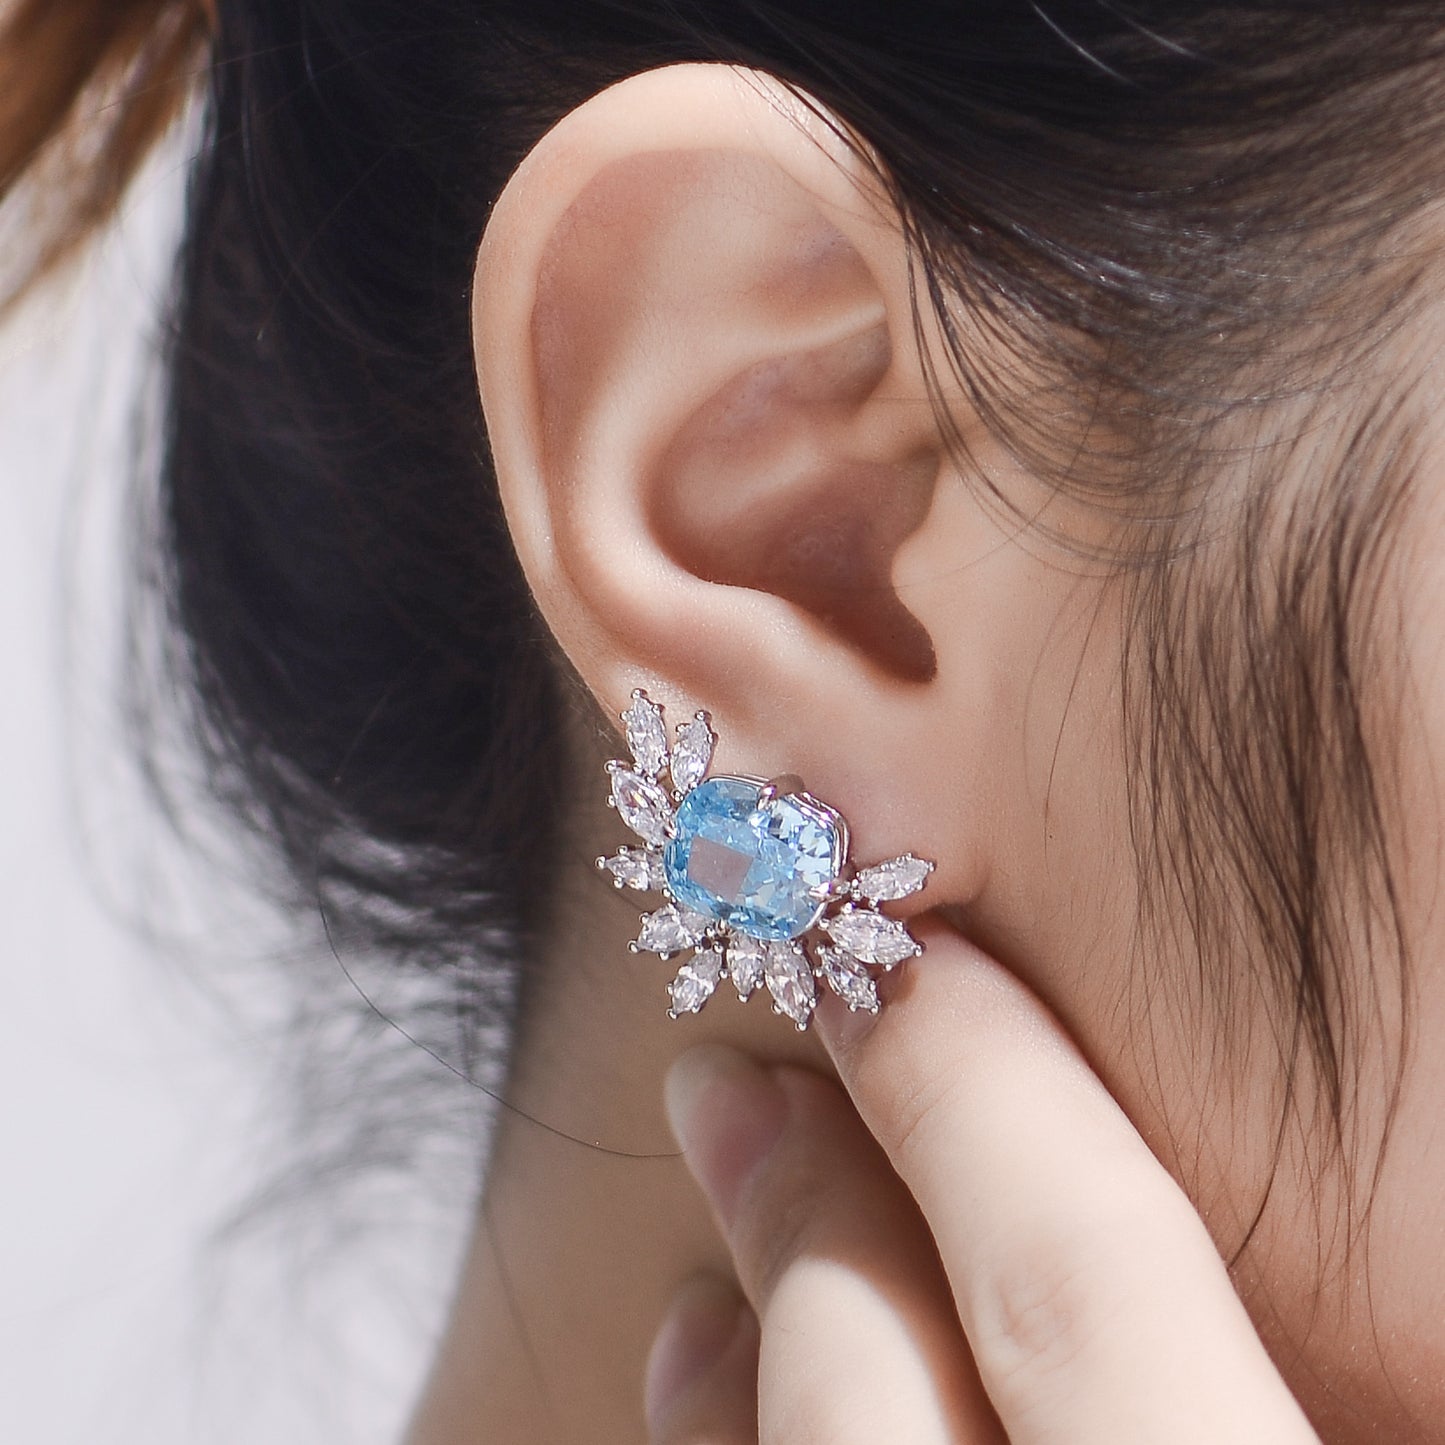 Blue Zircon 9*11mm Rectangle Ice Cut Half Annular Petals Silver Studs Earrings for Women